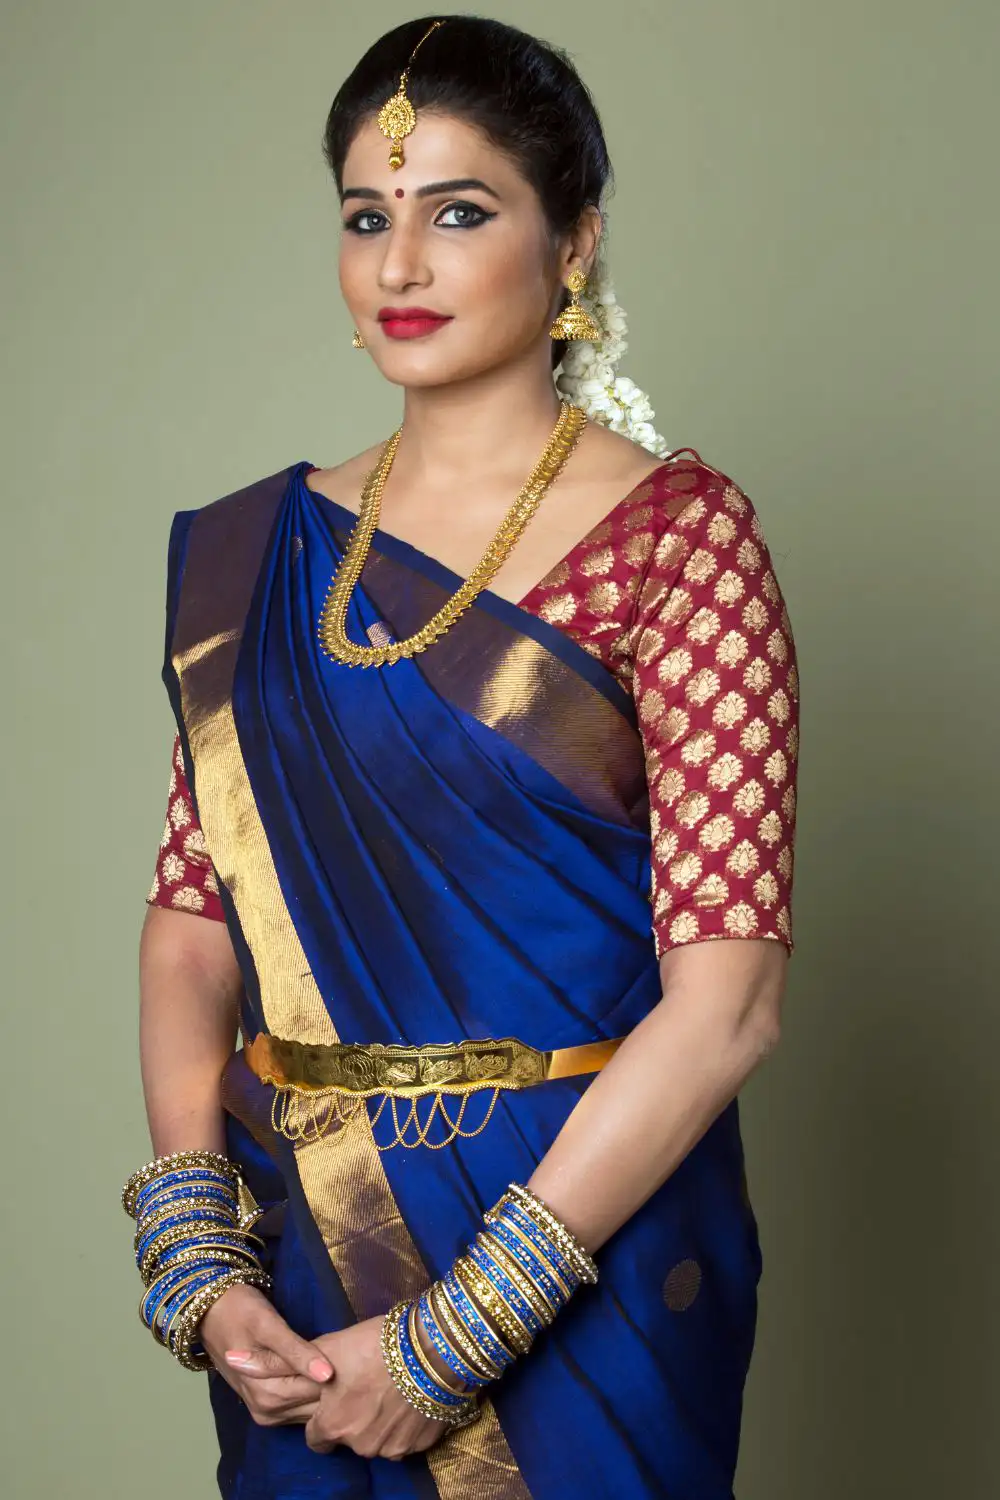 Indian women in traditional saree bride attire